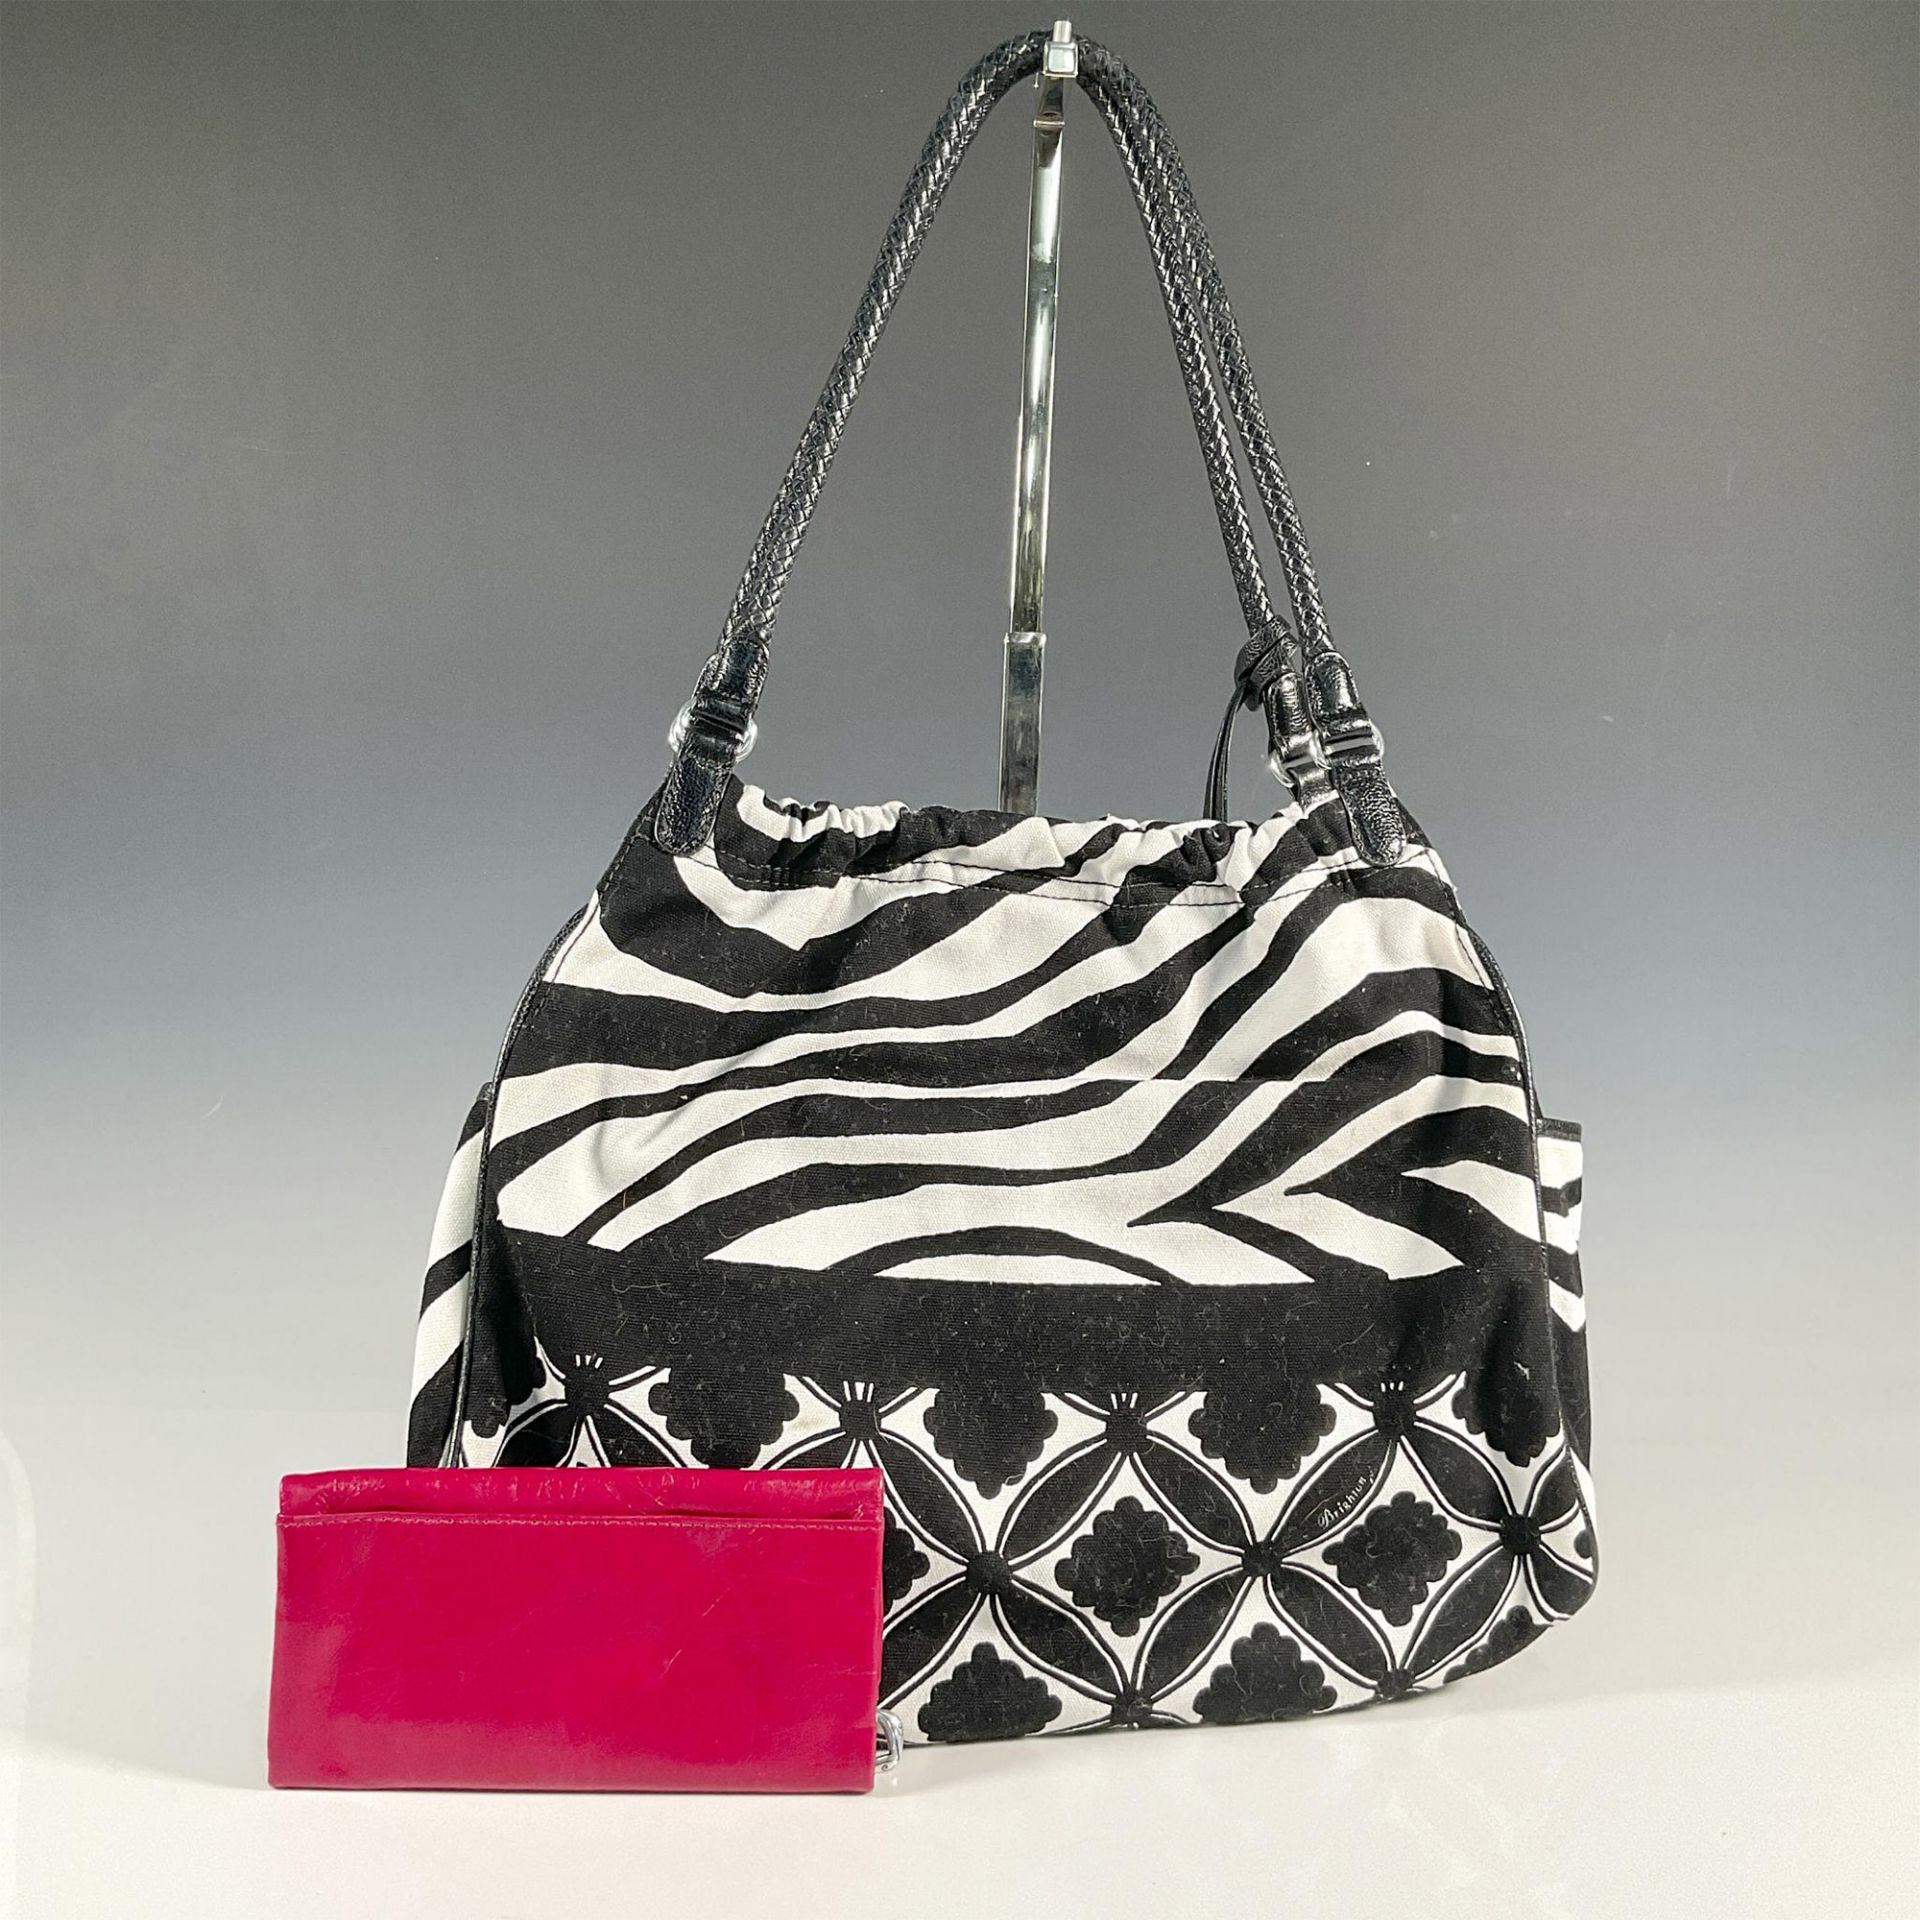 2pc Brighton Canvas Handbag + Wallet, Black/White/Pink - Image 2 of 4